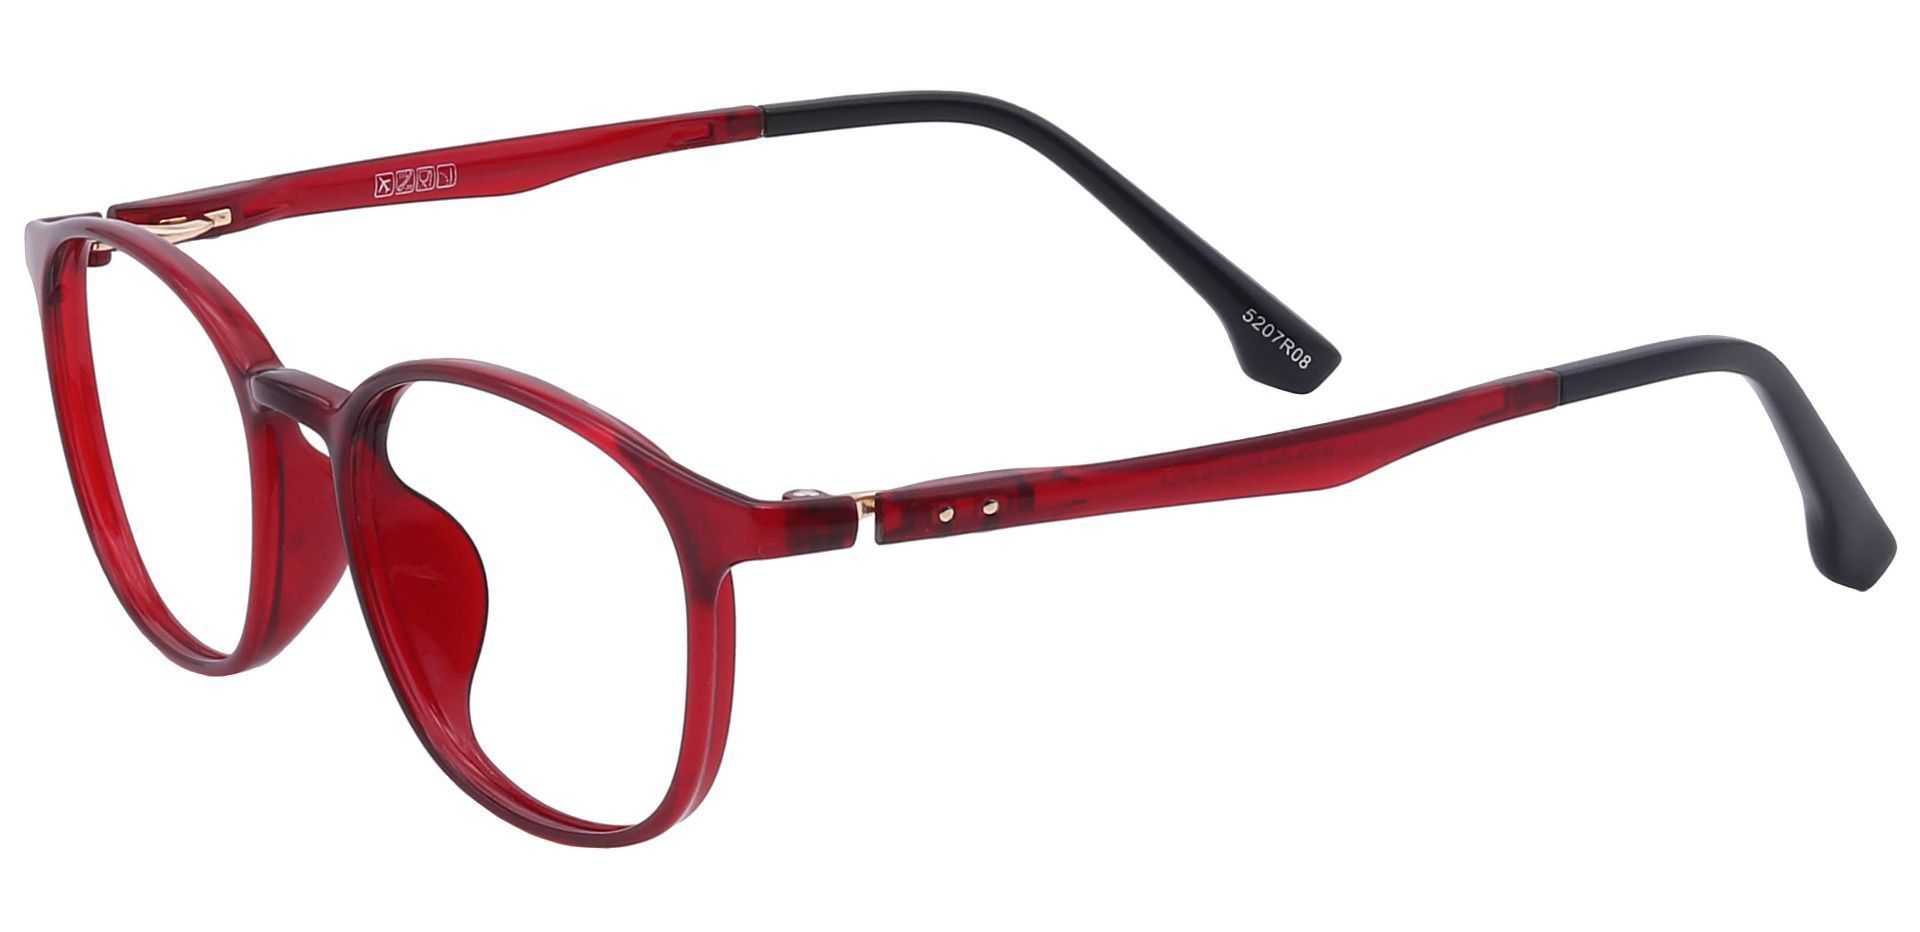 Shannon Oval Progressive Glasses - Red